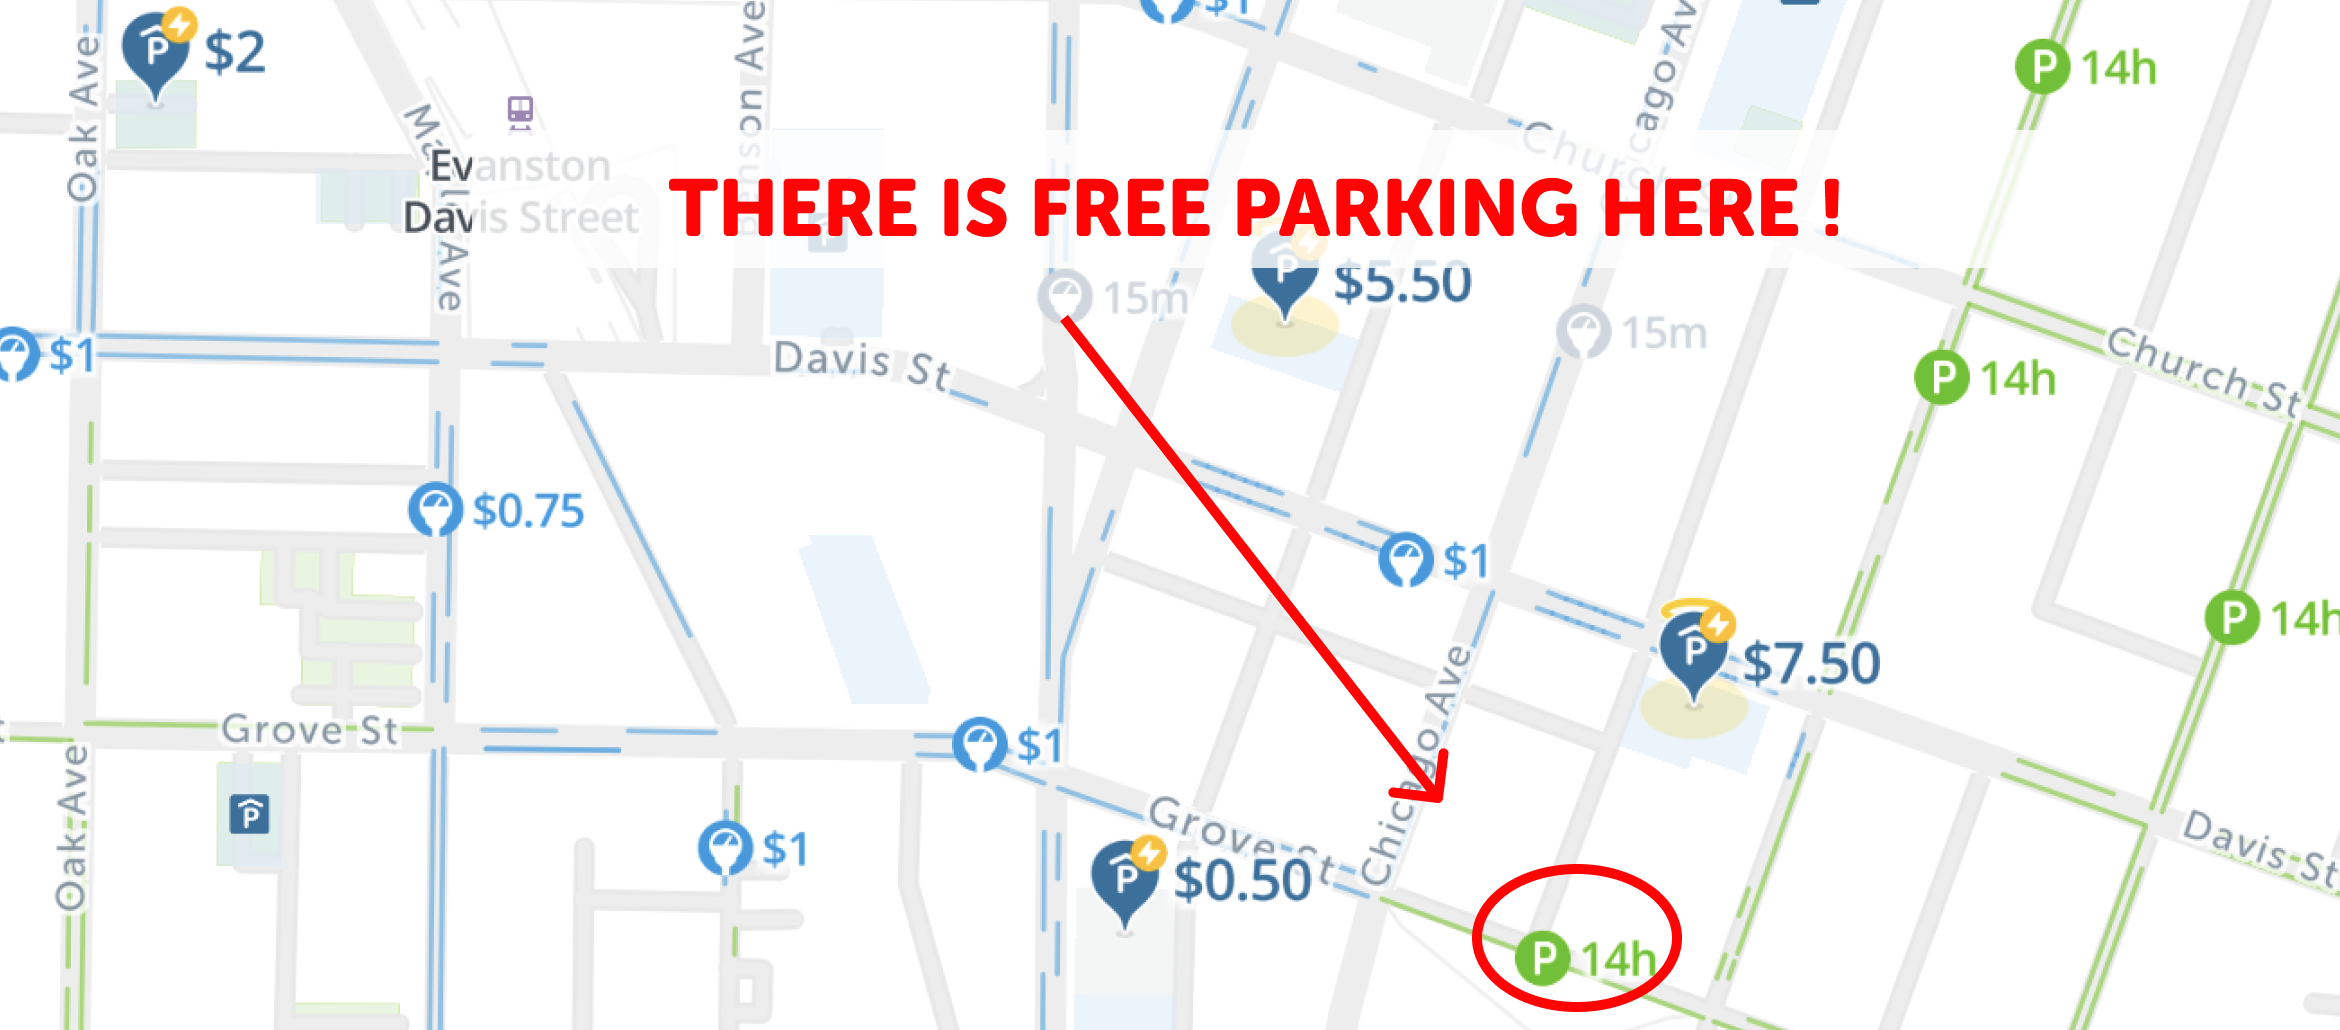 map of free parking in Evanston - SpotAngels